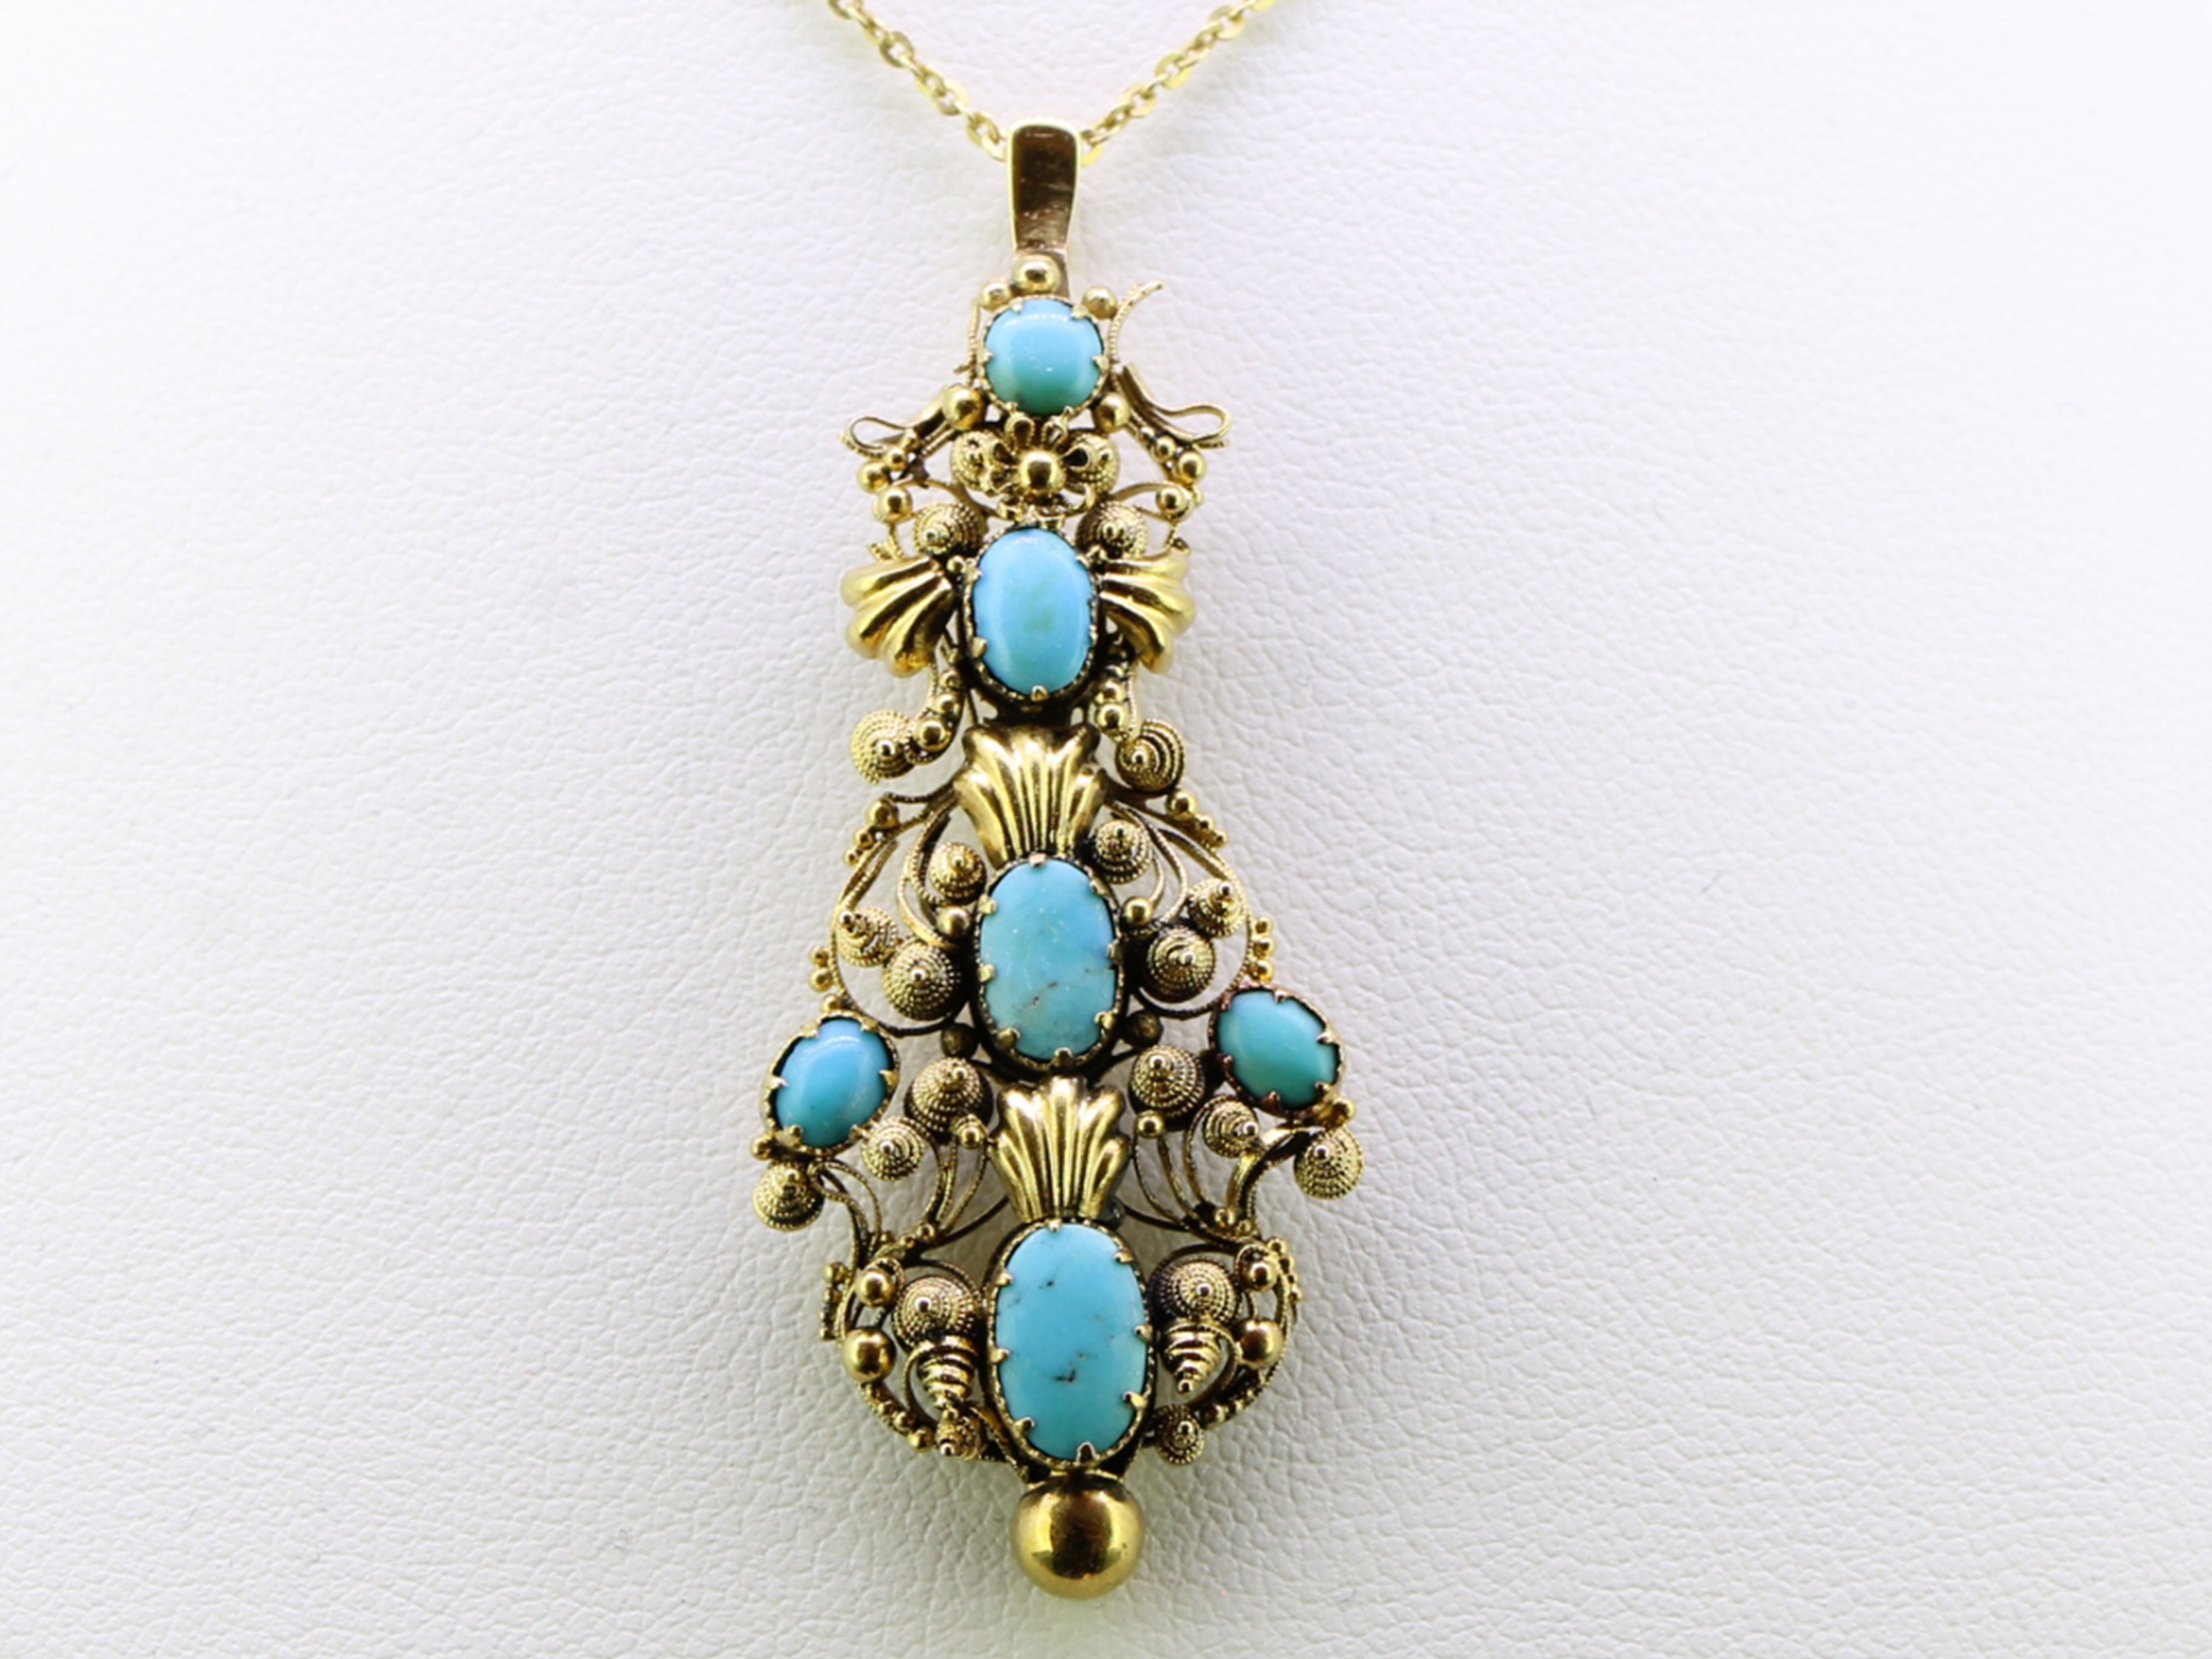 Incredible turquoise gold georgian pendant